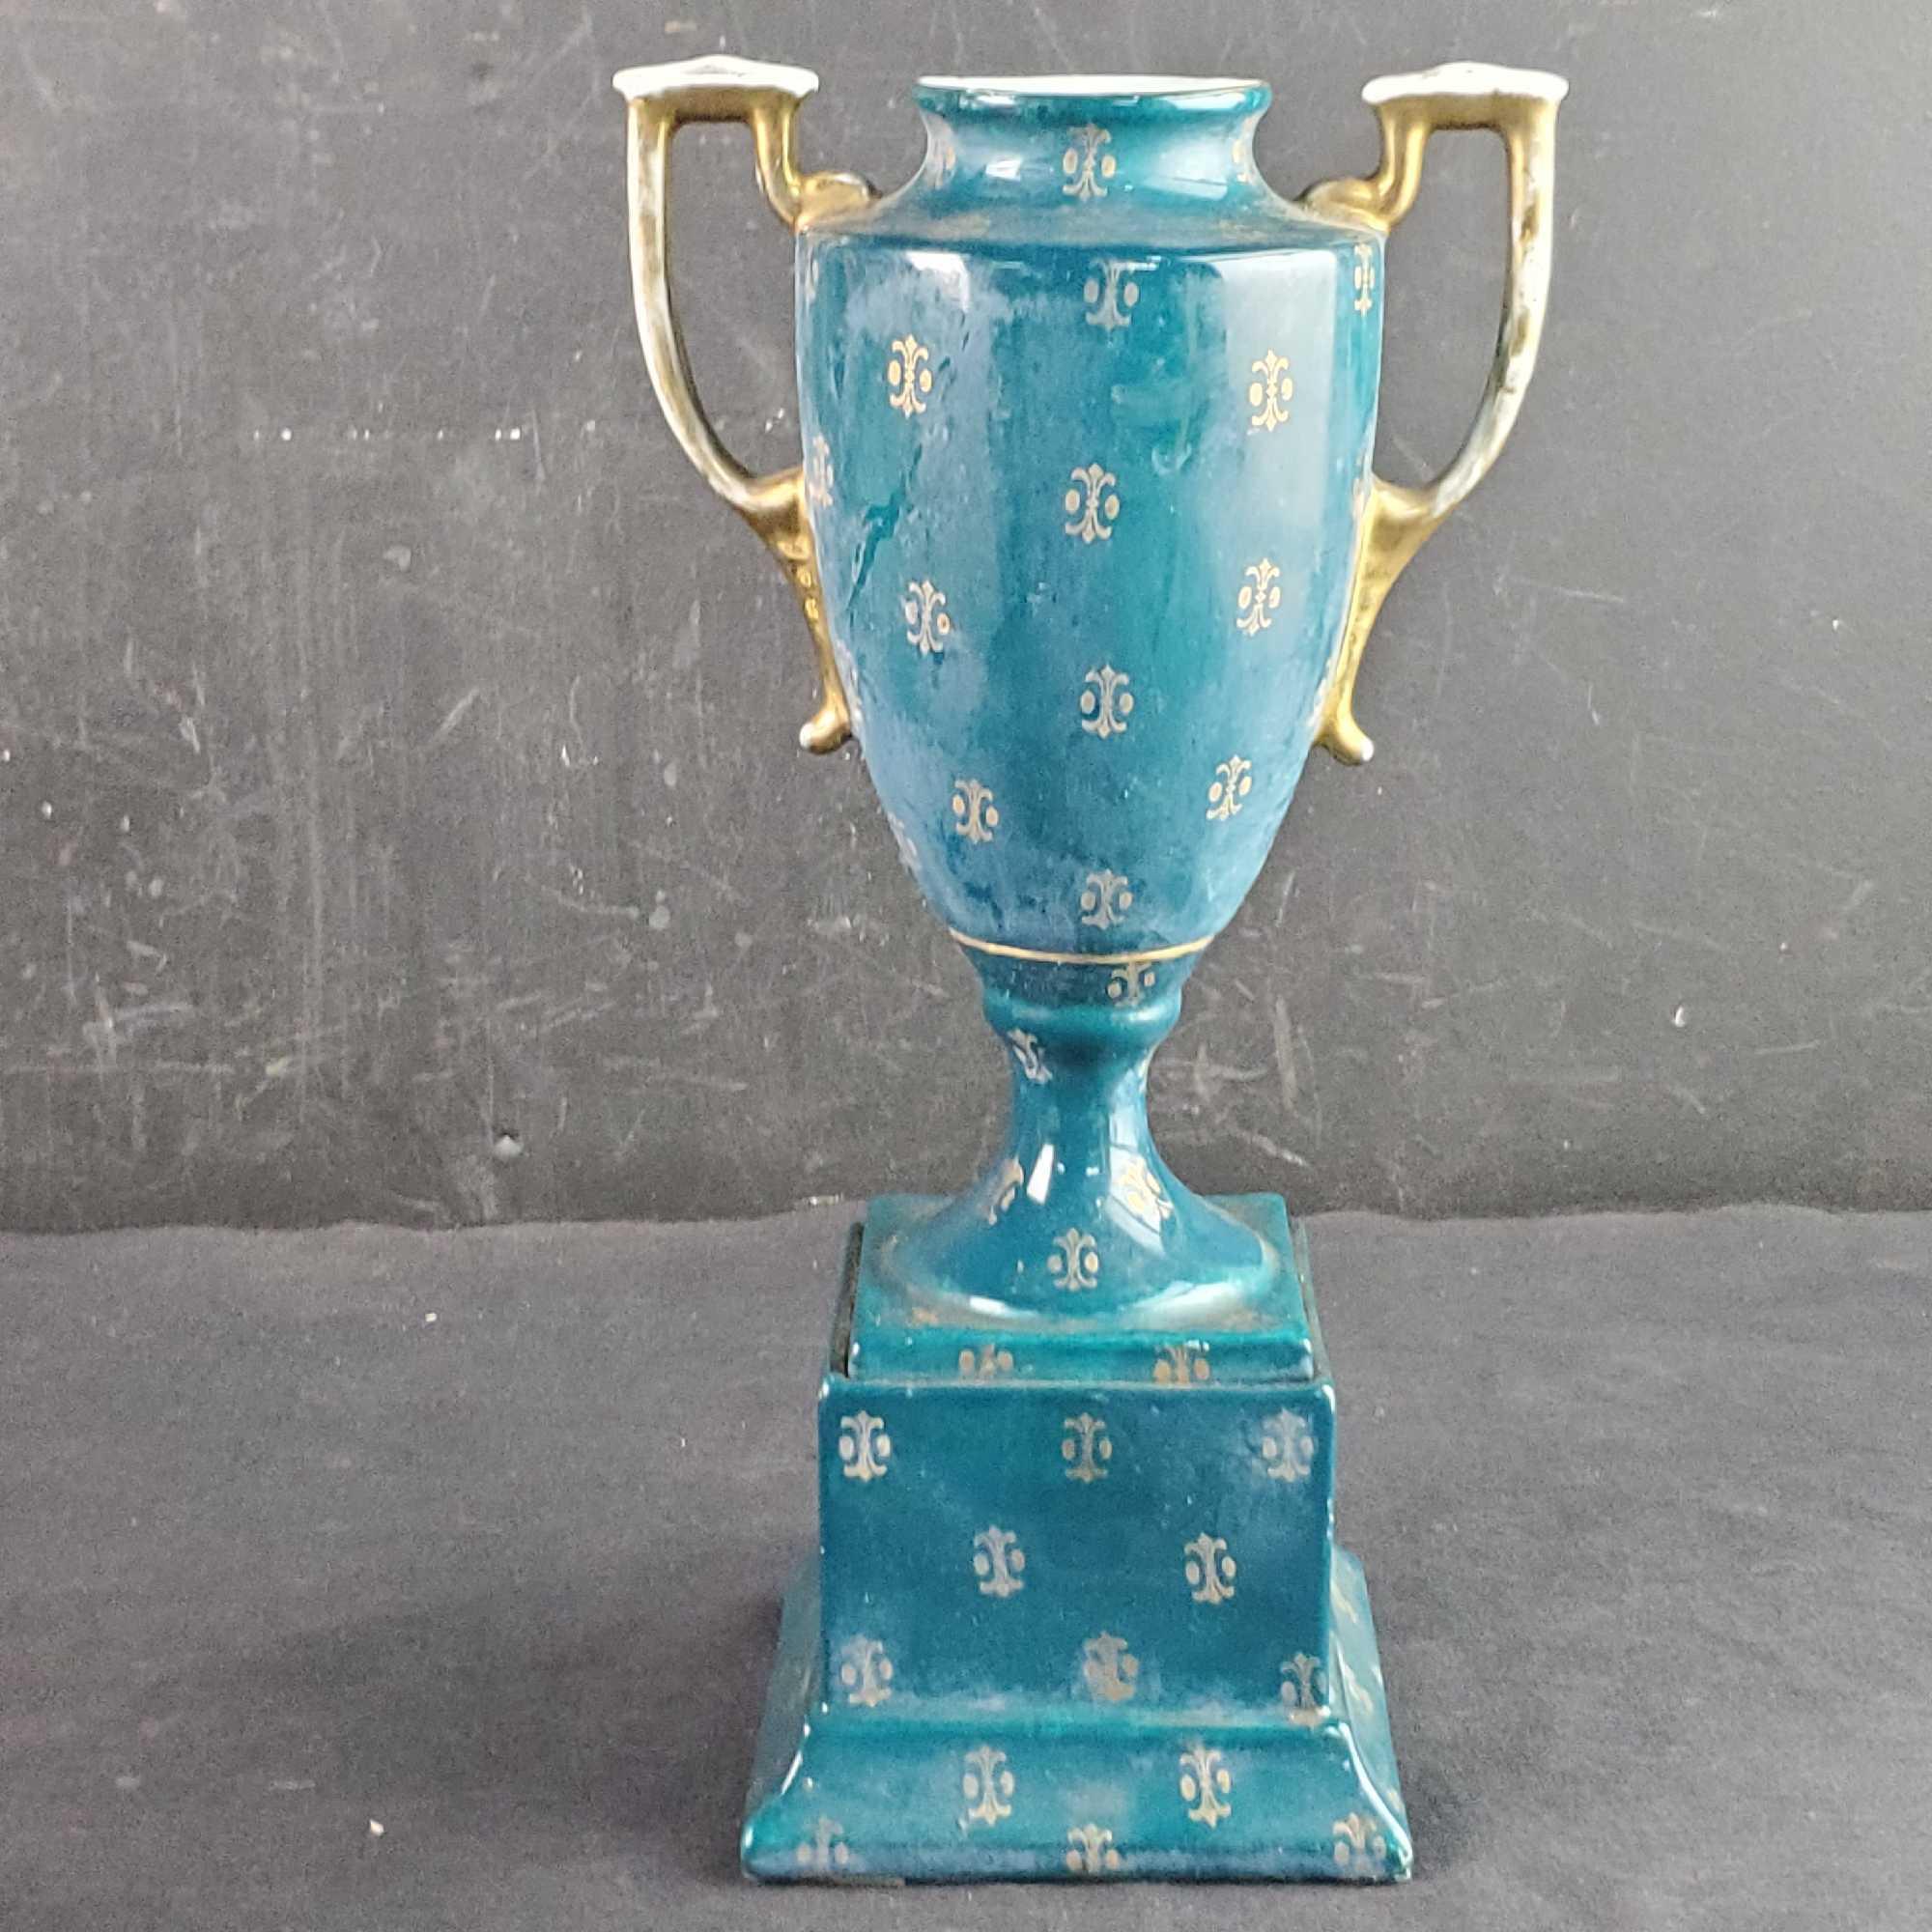 Vintage handmade/painted porcelain emperor figurine vase gold rim bowl Vienna porcelain piece